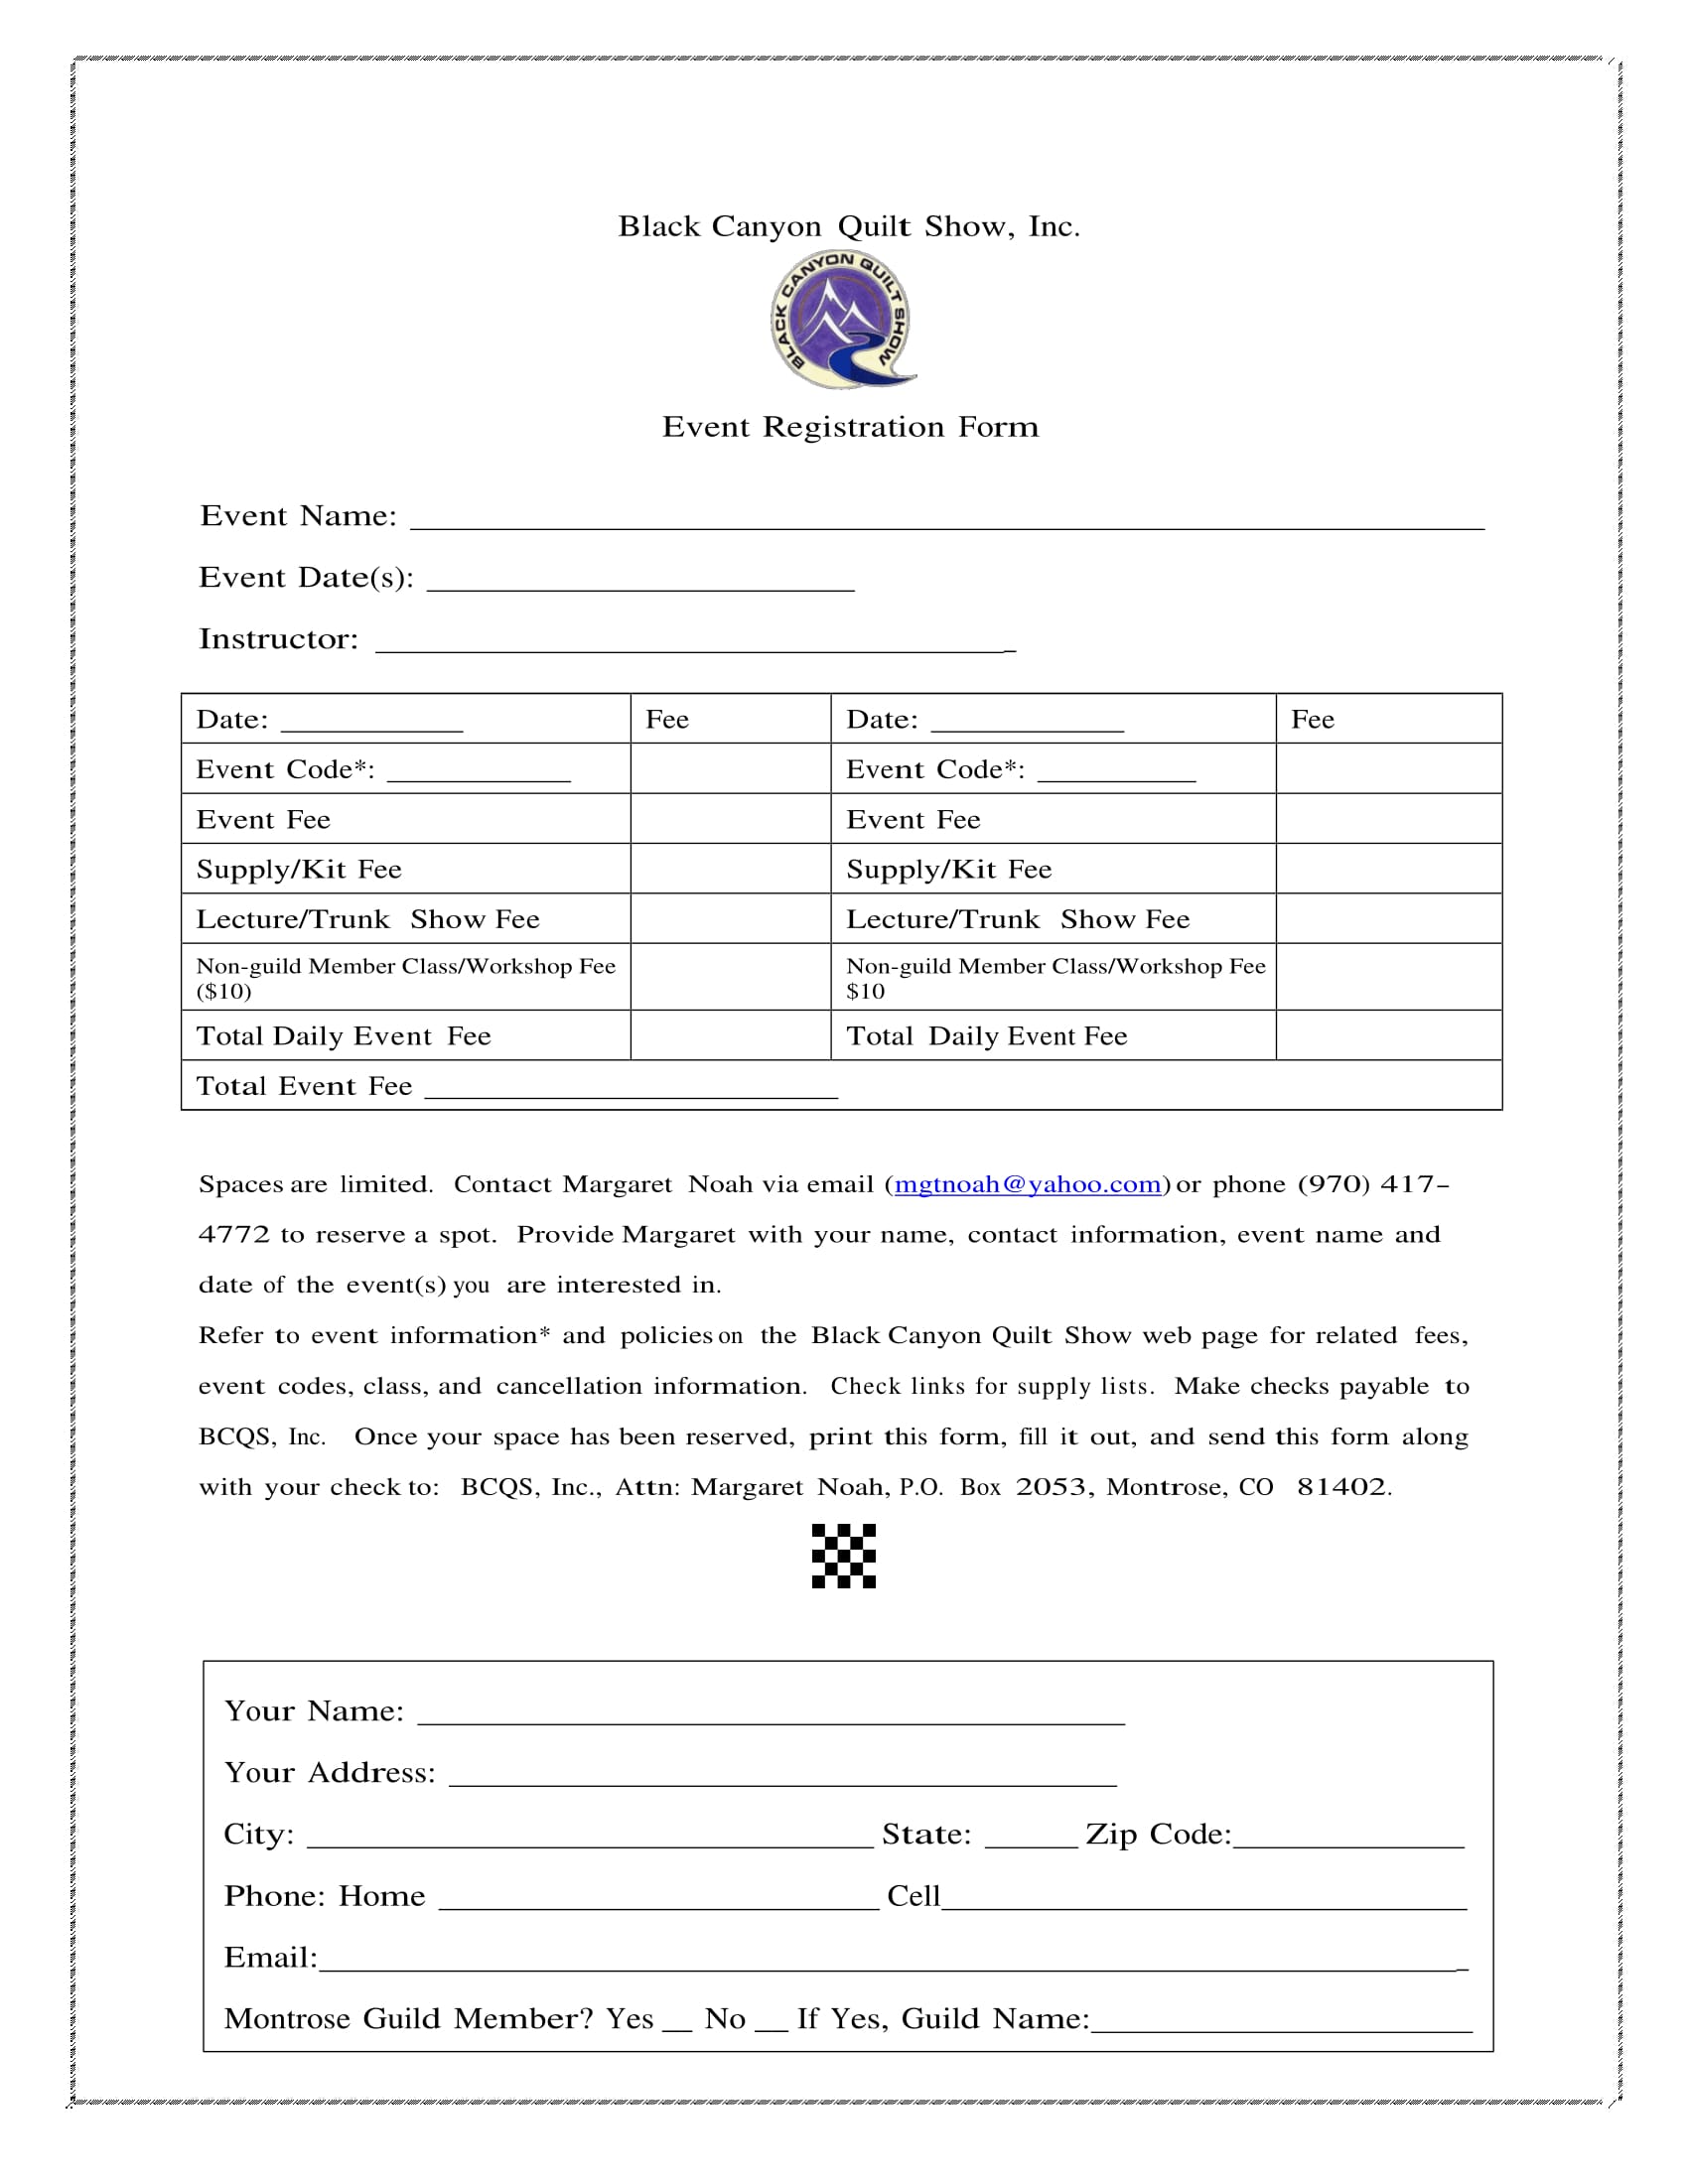 quilt show event registration form 1